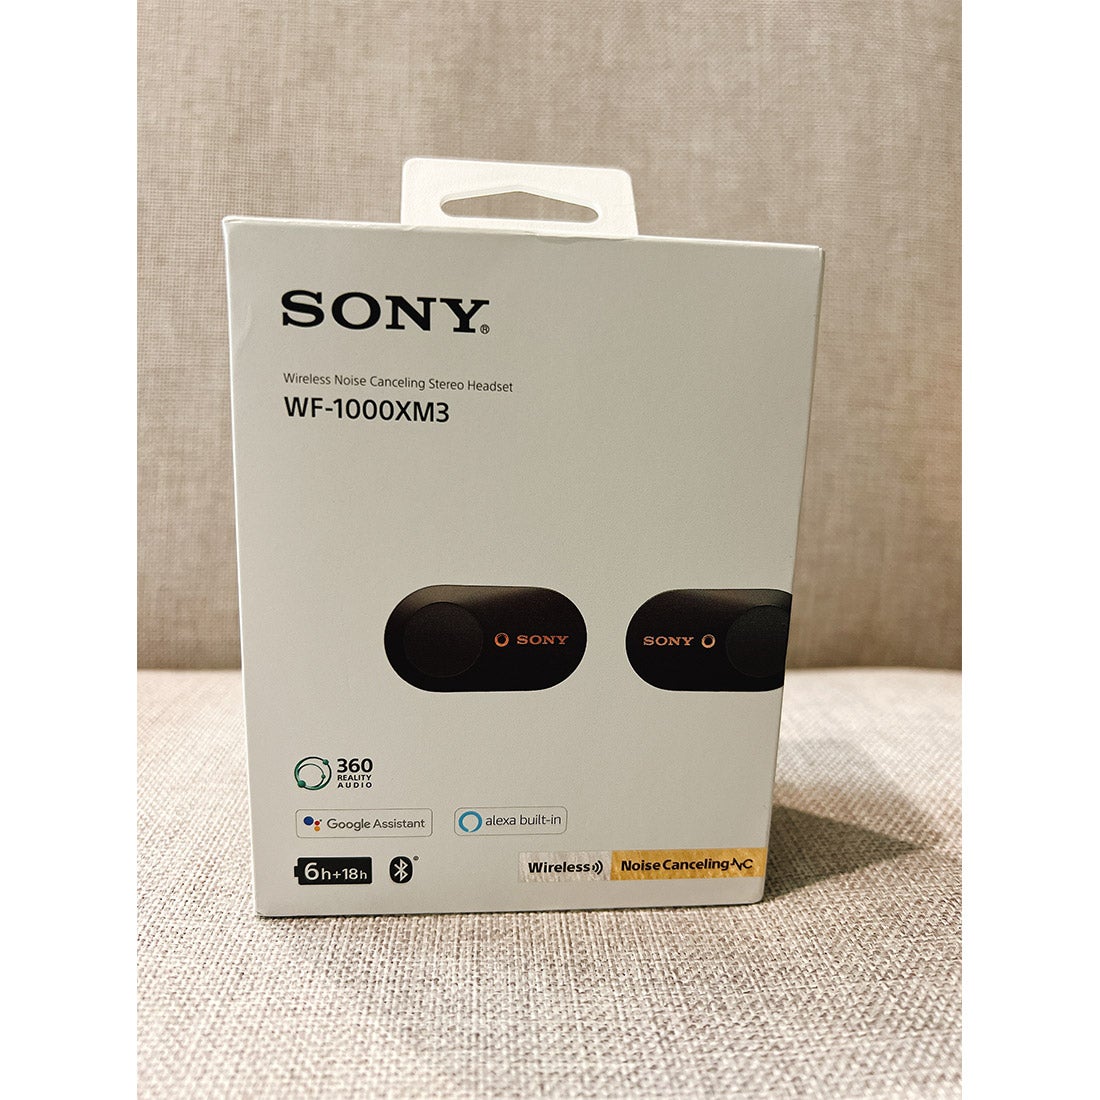 Sony WF-1000XM3 Wireless Noise Cancelling Headphones